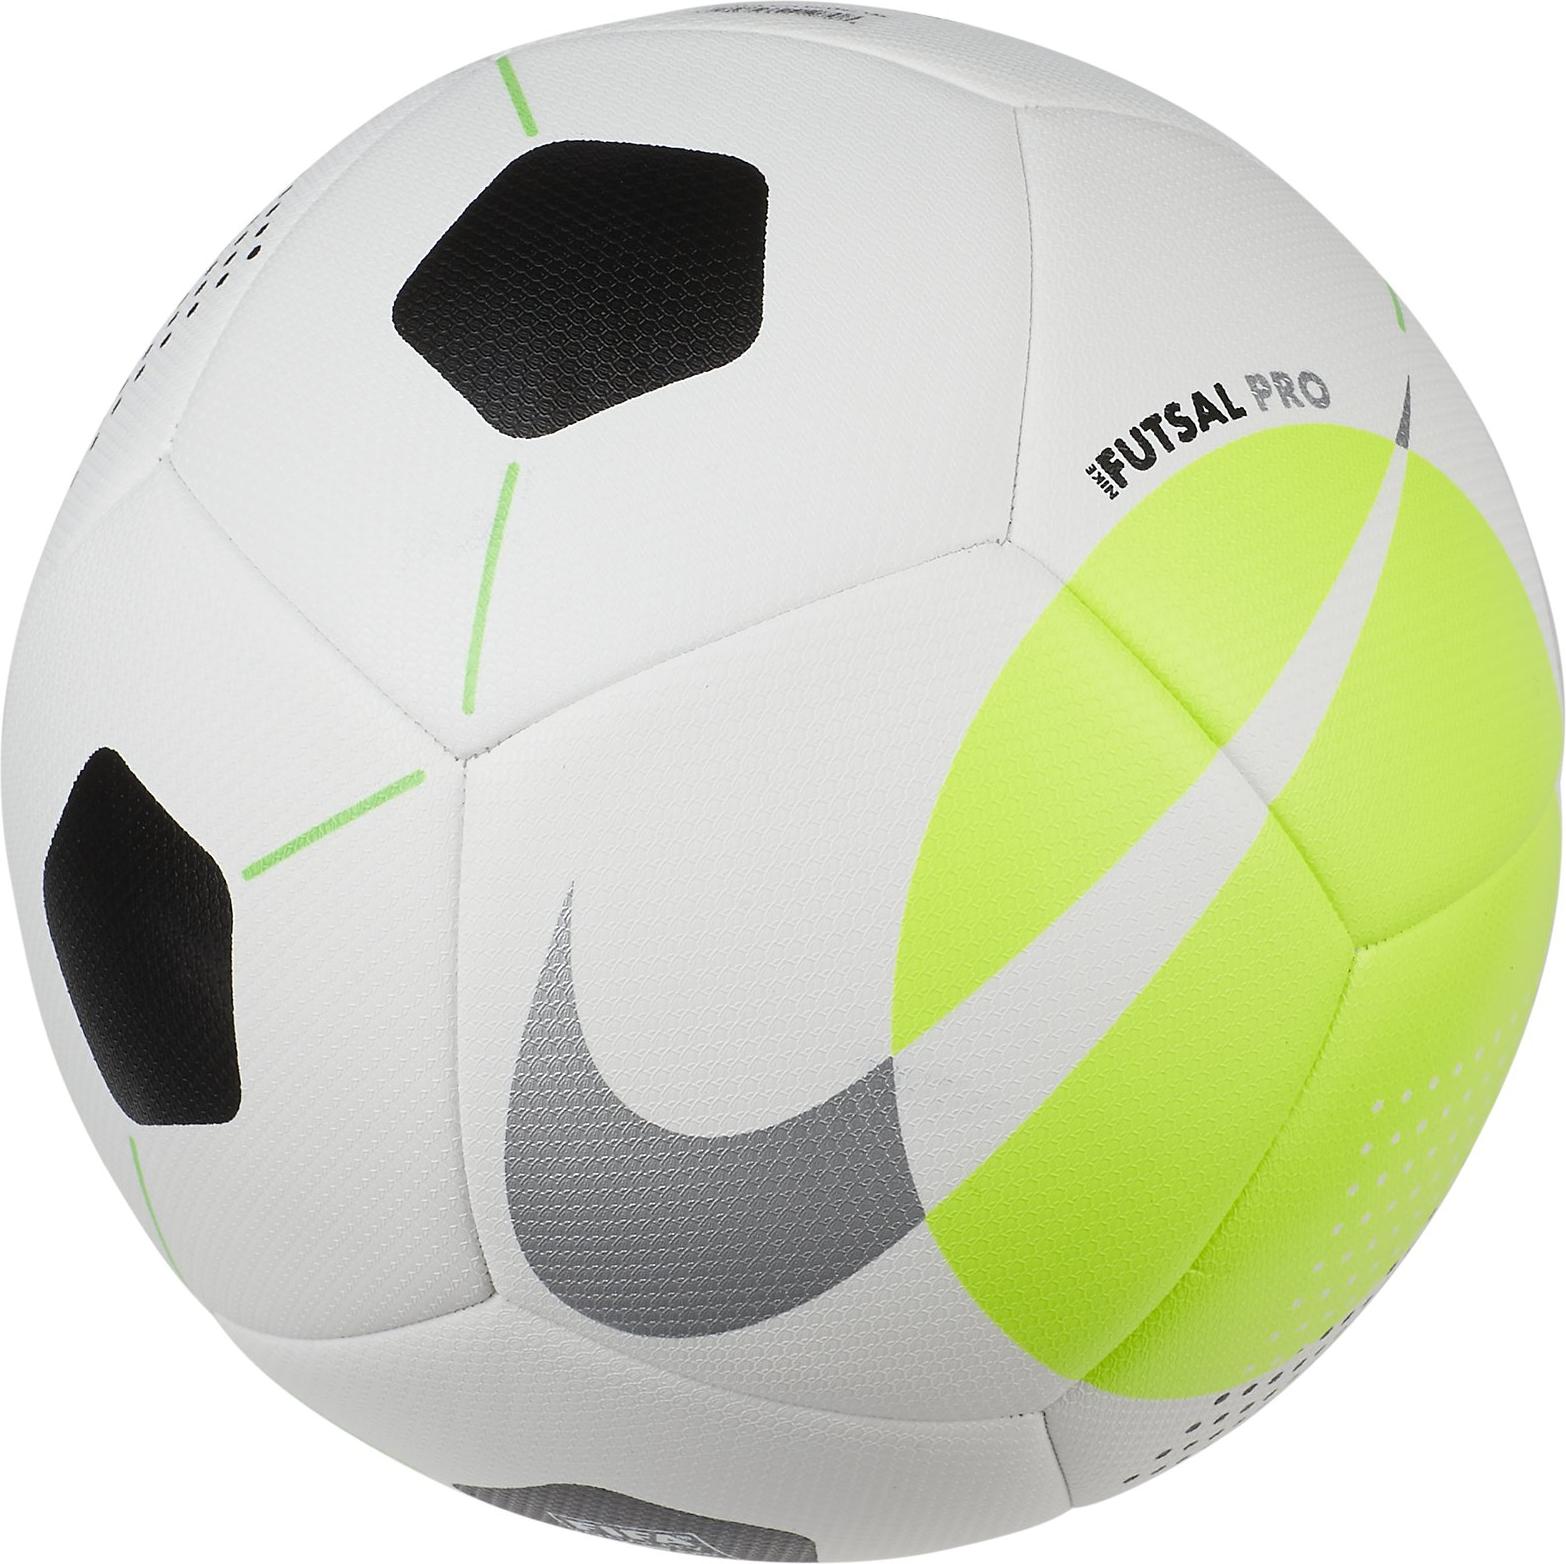 Nike Futsal Pro Soccer Ball Labda